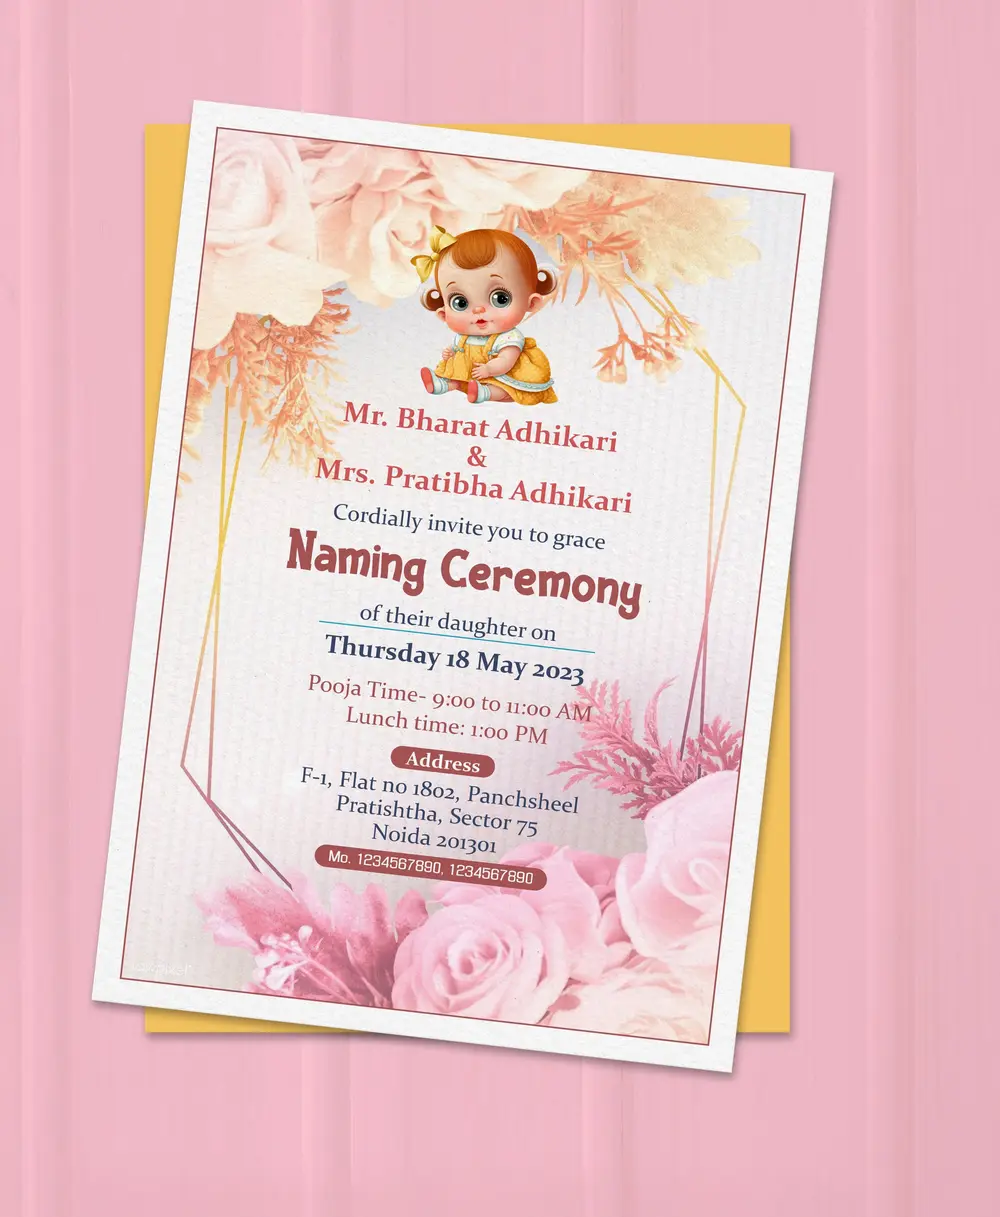 Naming ceremony invitation card template 180523